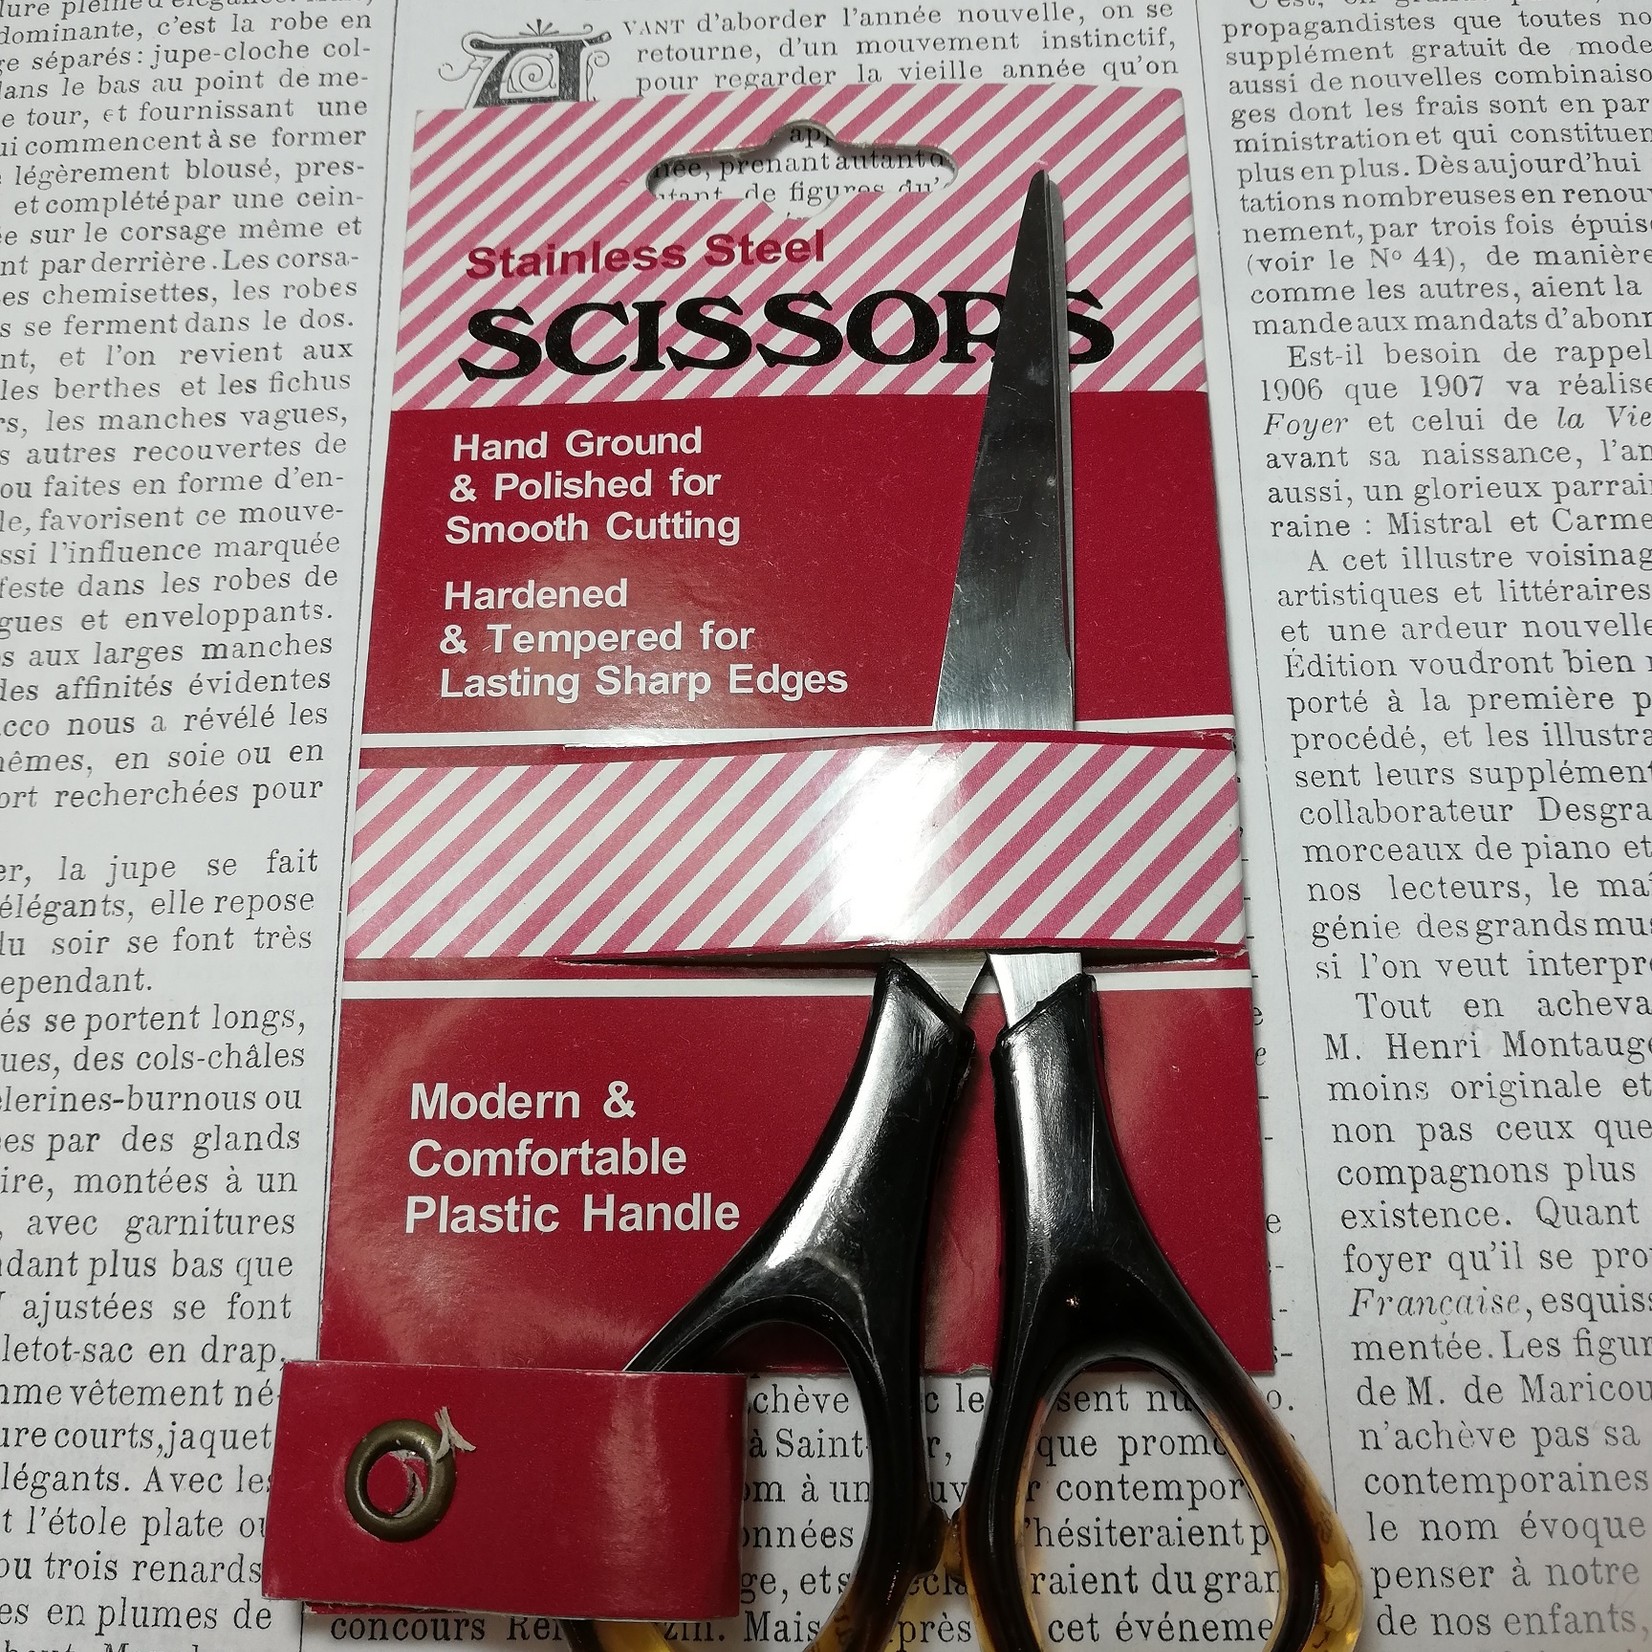 Savoy small handsewing scissors.